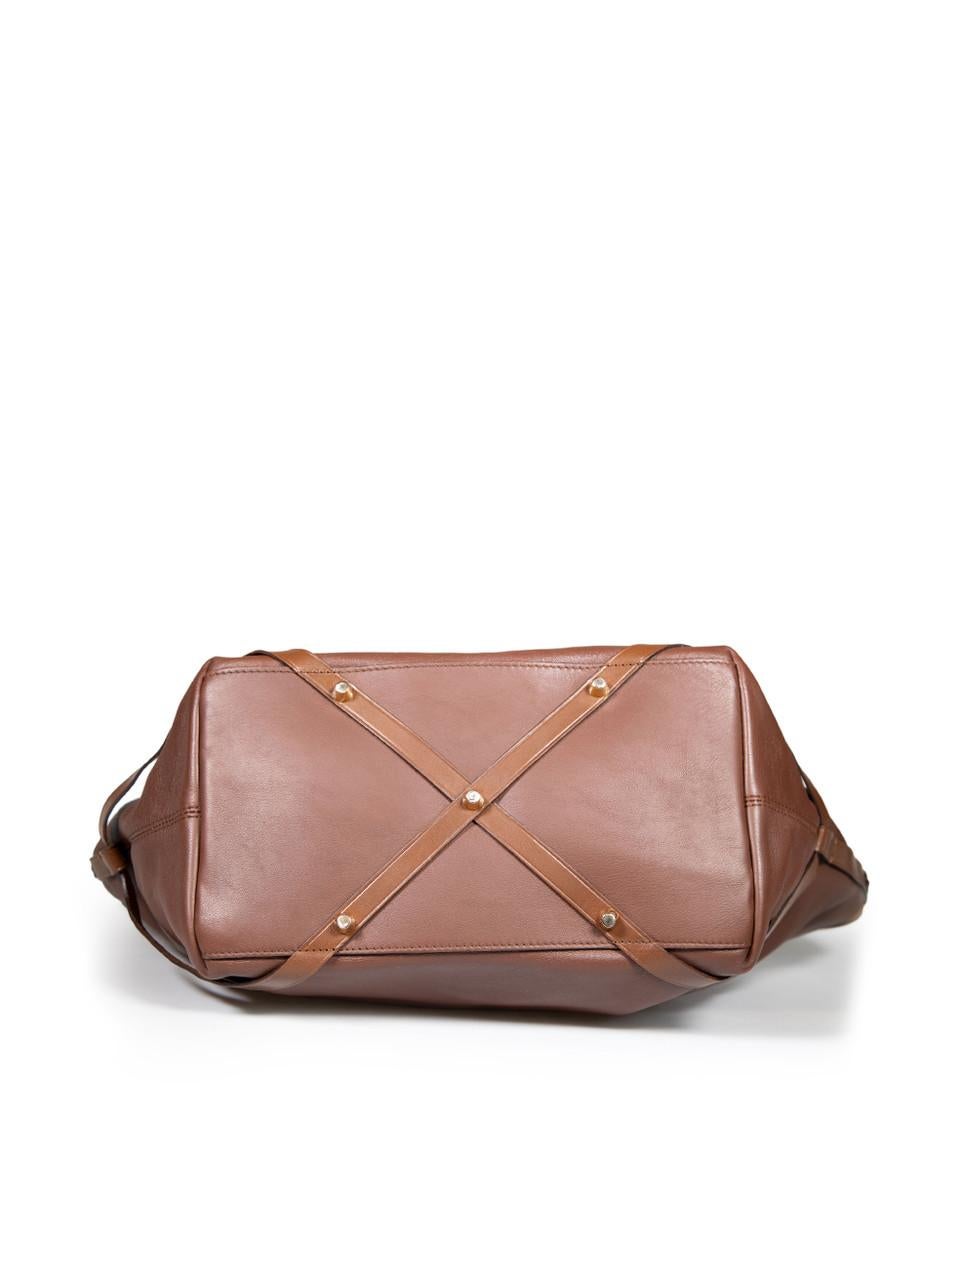 Women's Burberry Brown Leather Medium Nova Check Salisbury Tote For Sale